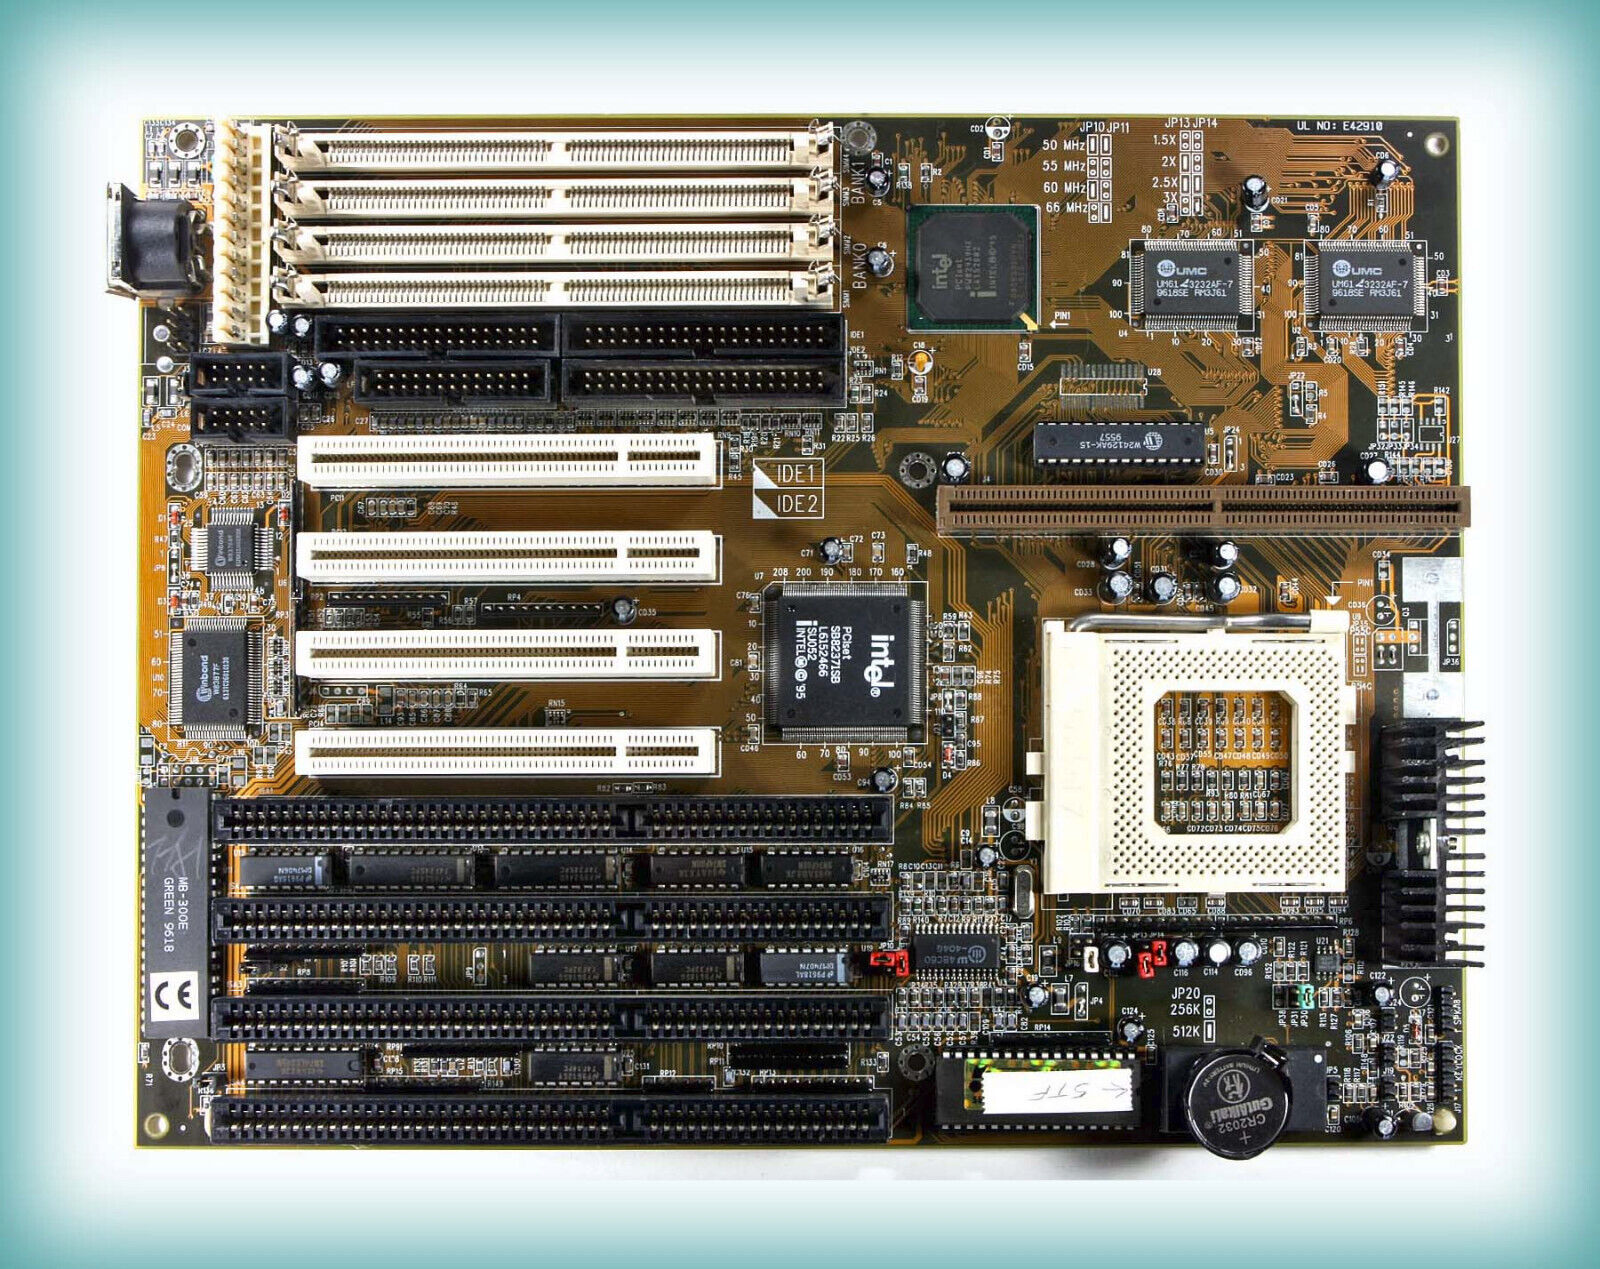 Vintage Soyo 5TF2 S7 P200 256K AT Motherboard ISA/PCI, Multi-I/O, PS2 — TESTED